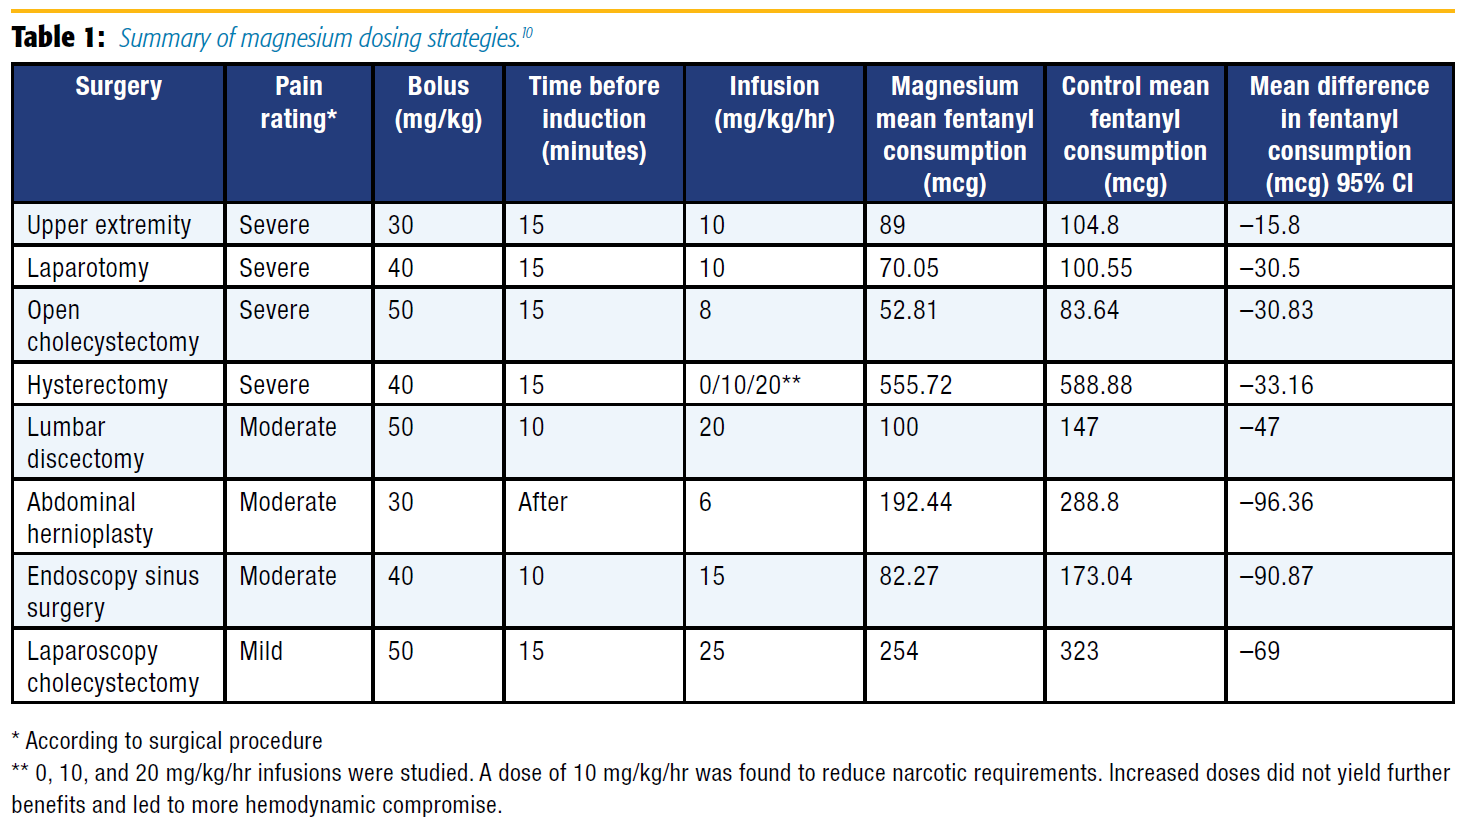 Table 1. Summary of magnesium dosing strategies